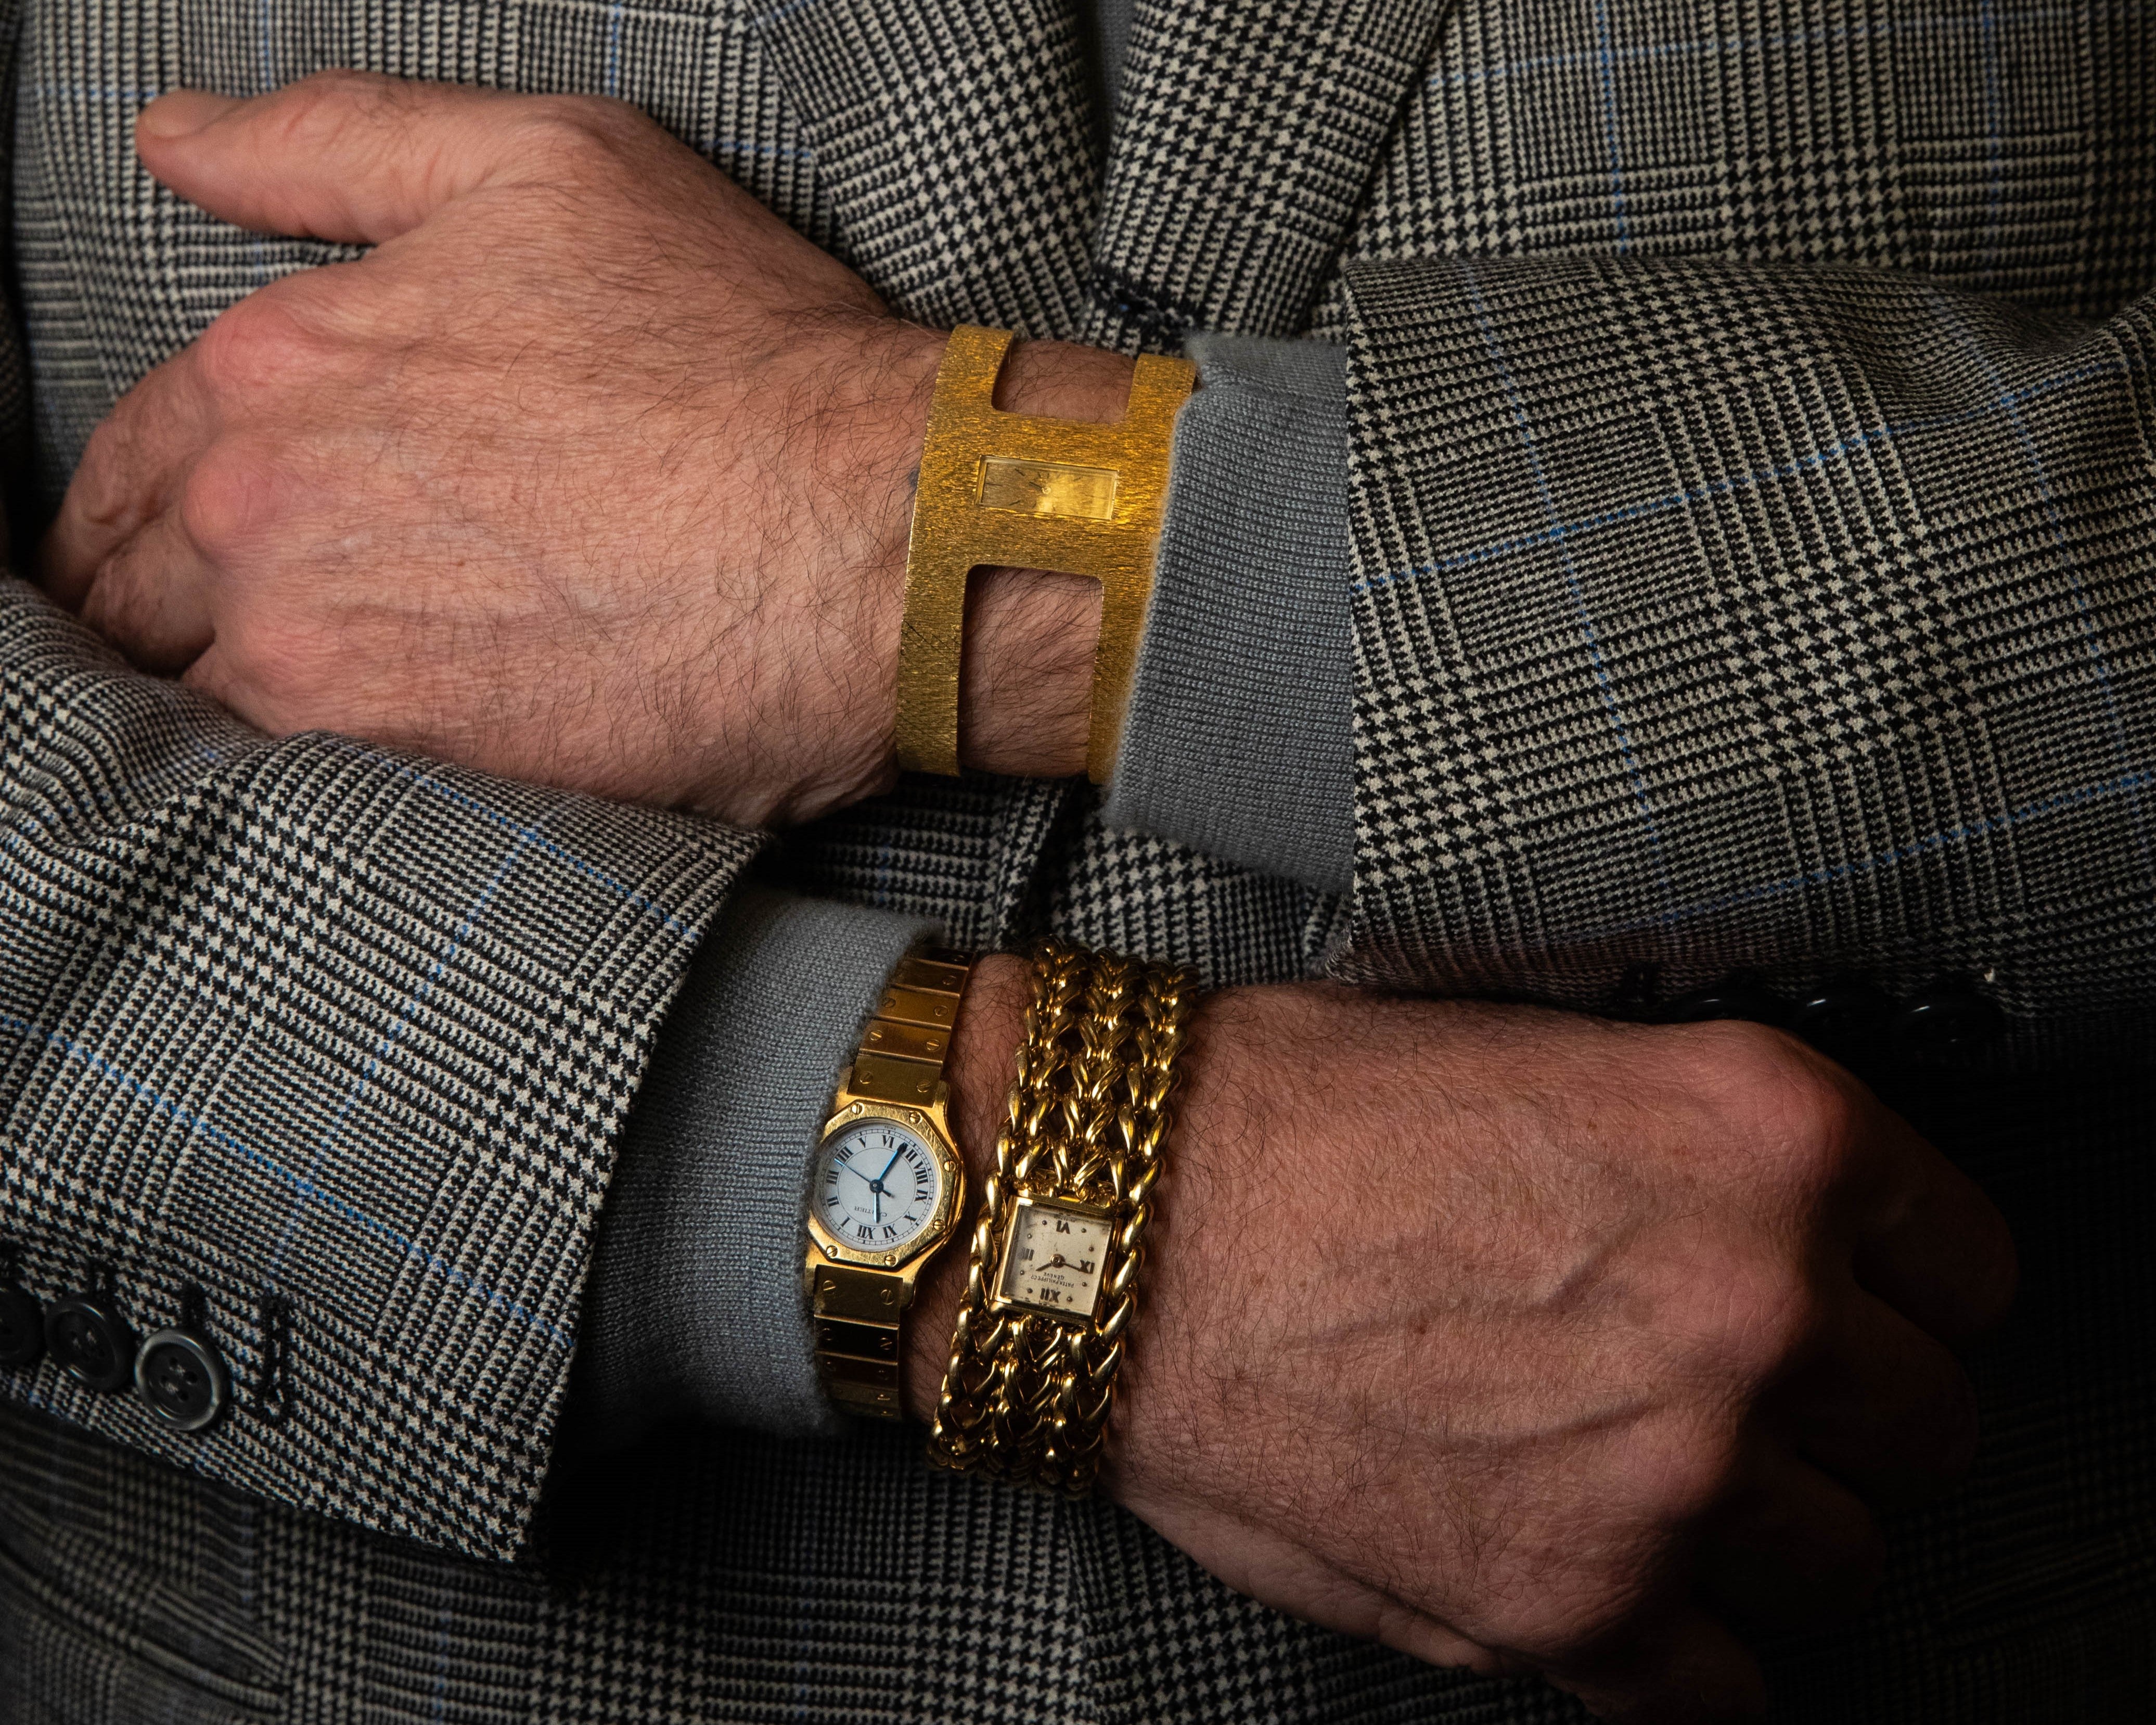 Max Bernardini wearing patek philippe watch, JCL and cartier watch